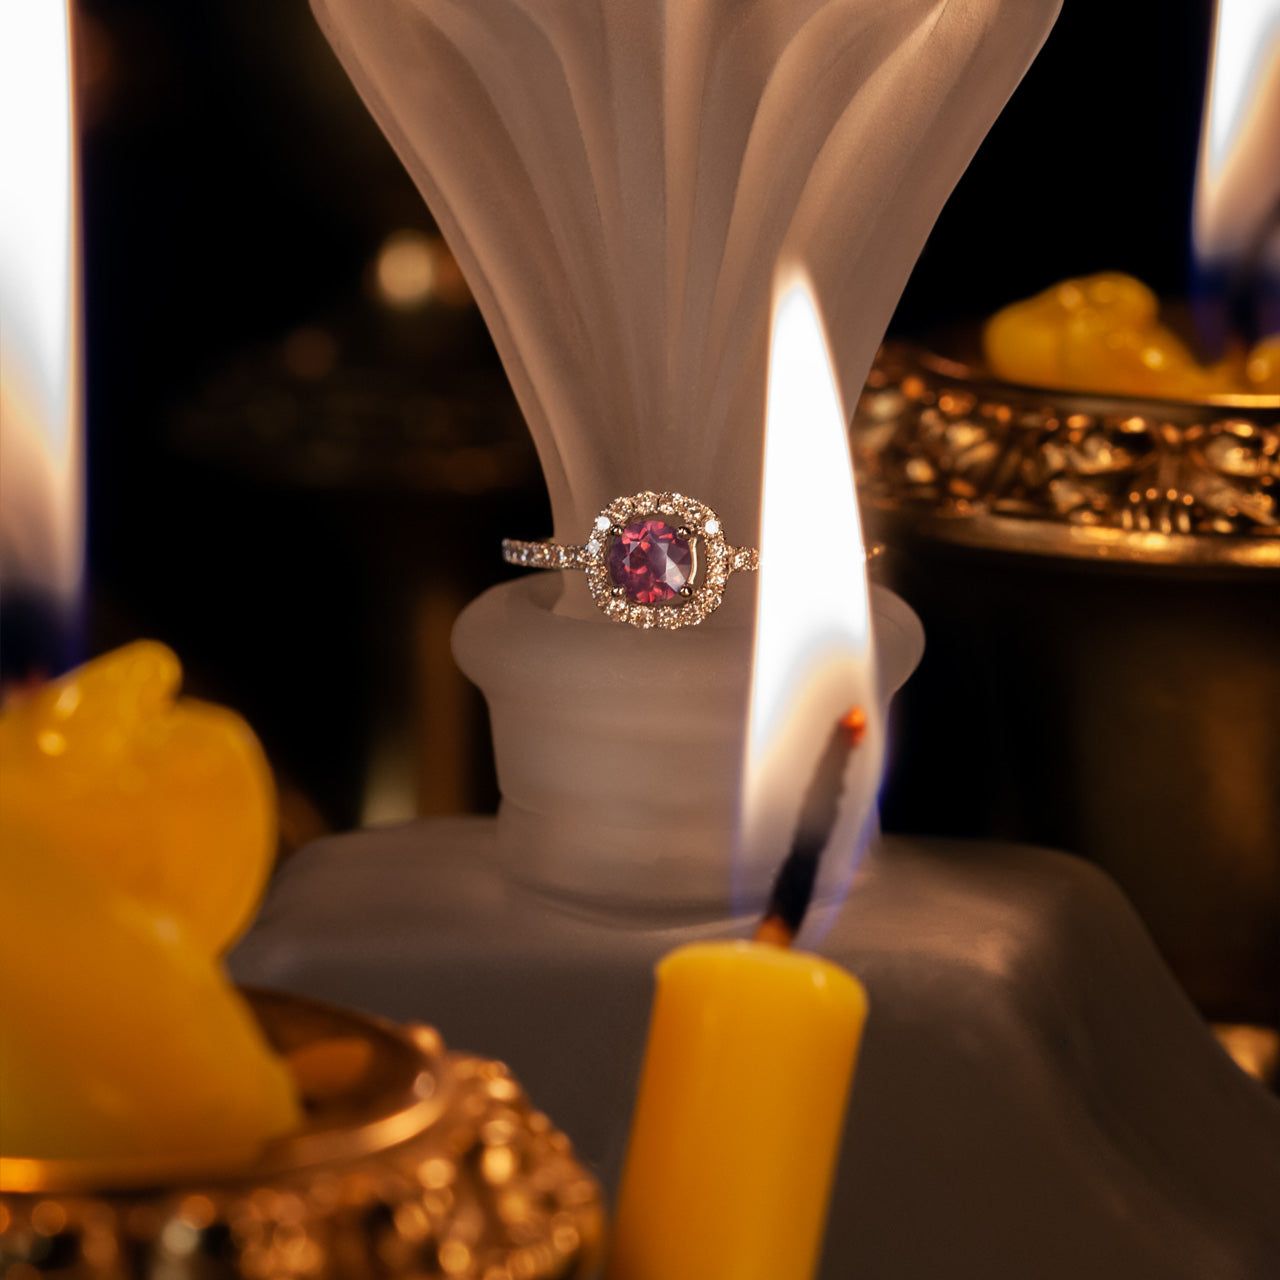 Rare 100% Color Change Natural Alexandrite Diamond 18k Gold Engagement Ring - The Alexandrite